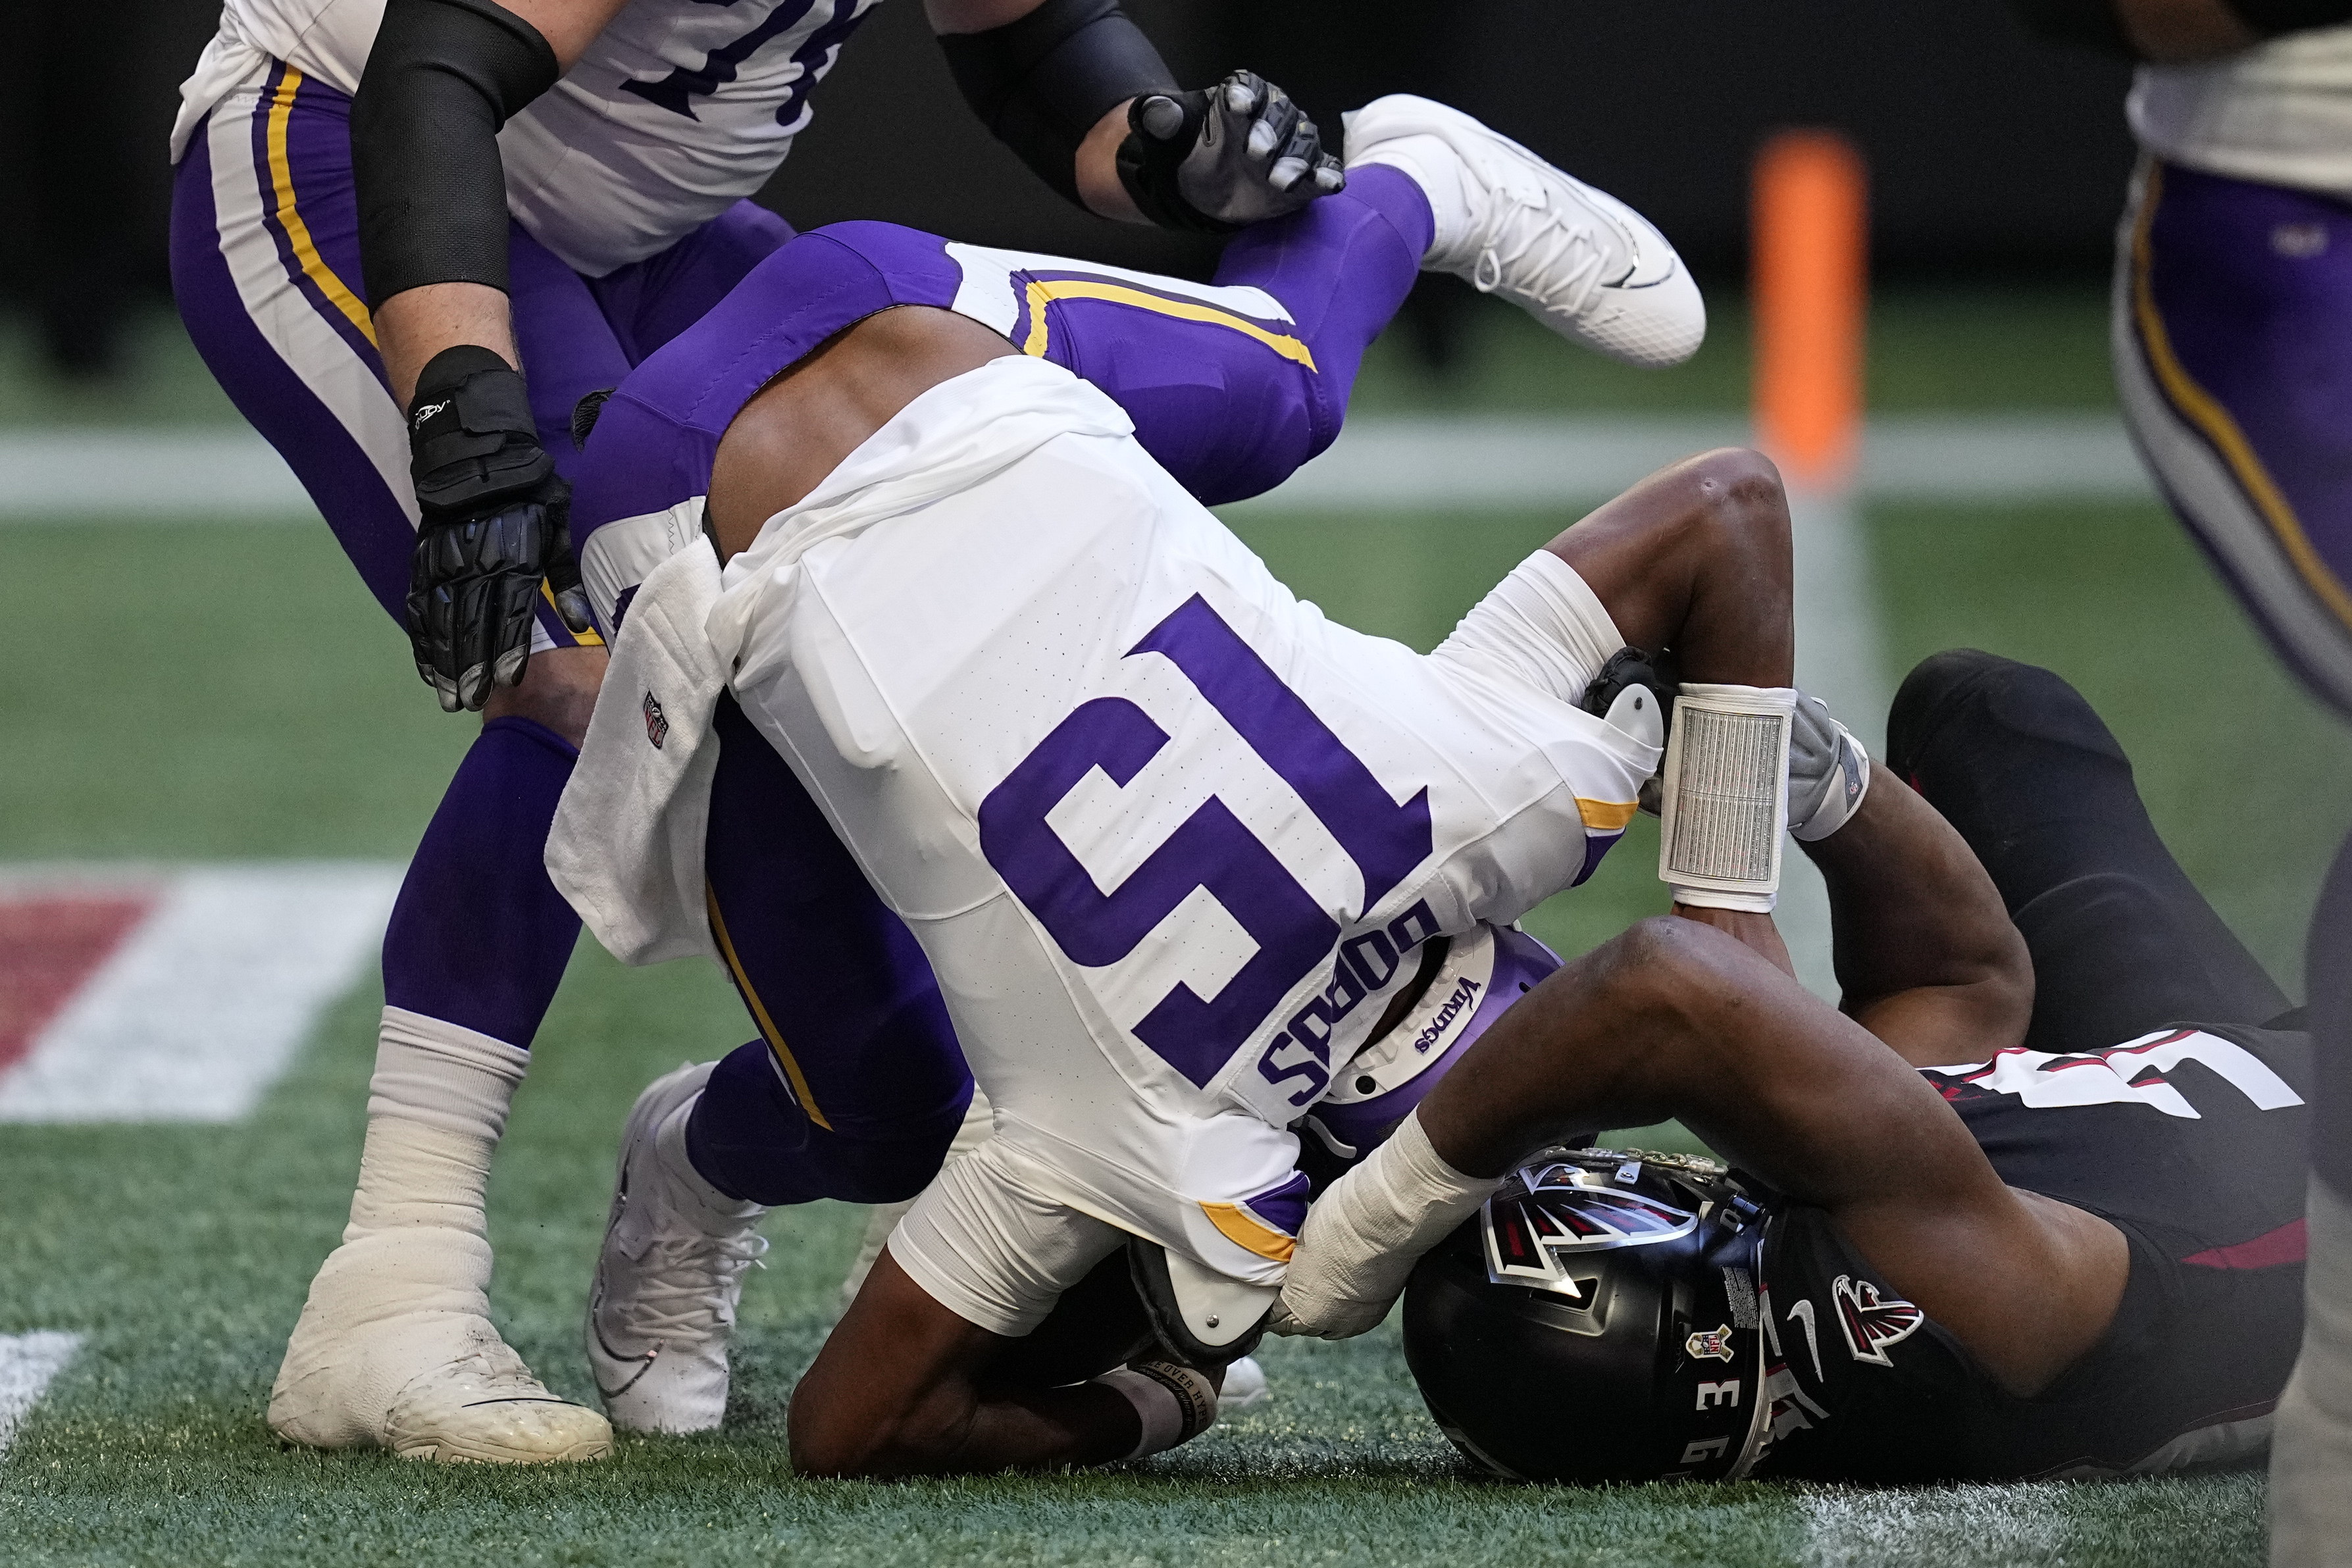 NFL Week 9 Game Recap: Minnesota Vikings 31, Atlanta Falcons 28